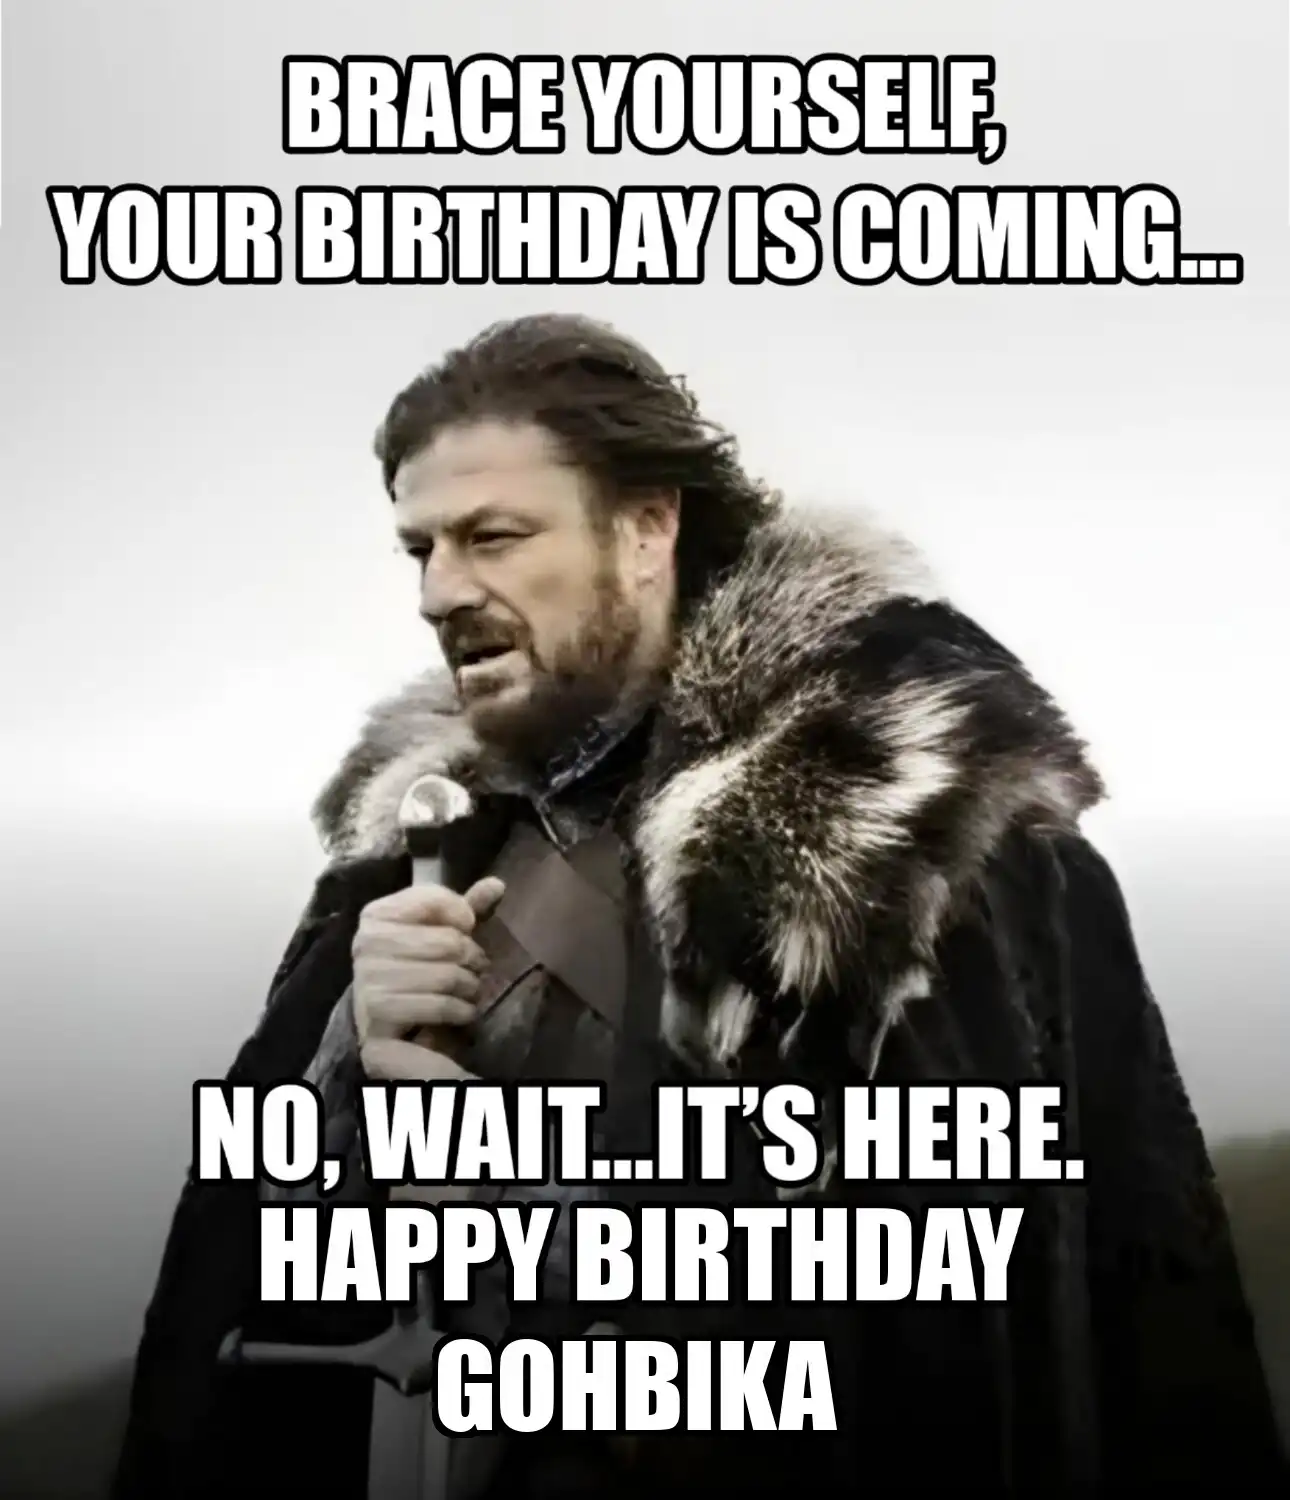 Happy Birthday Gohbika Brace Yourself Your Birthday Is Coming Meme